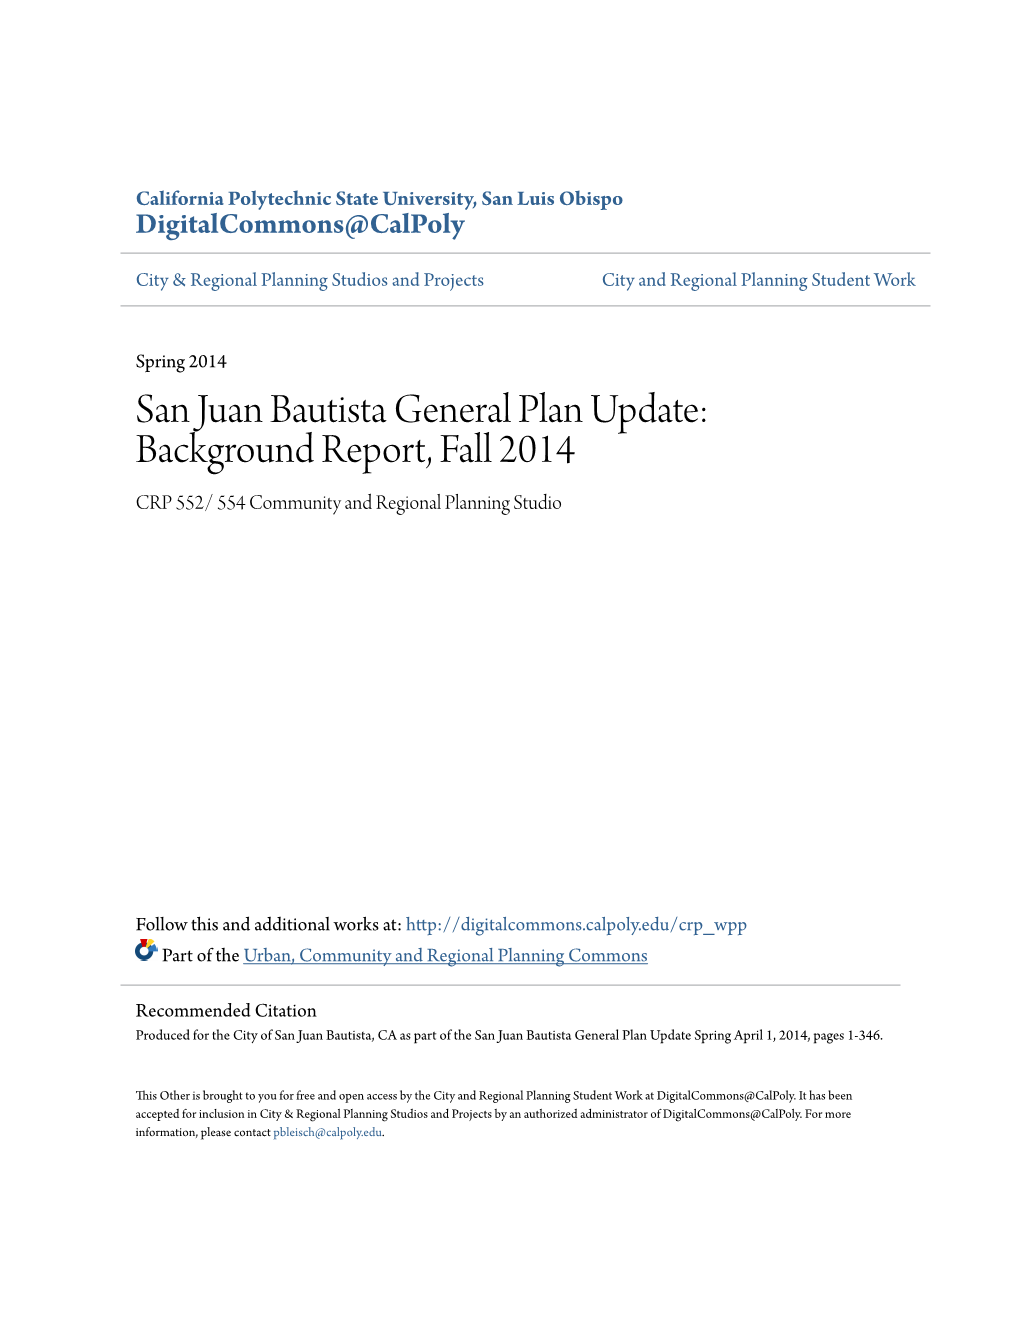 San Juan Bautista General Plan Update: Background Report, Fall 2014 CRP 552/ 554 Community and Regional Planning Studio